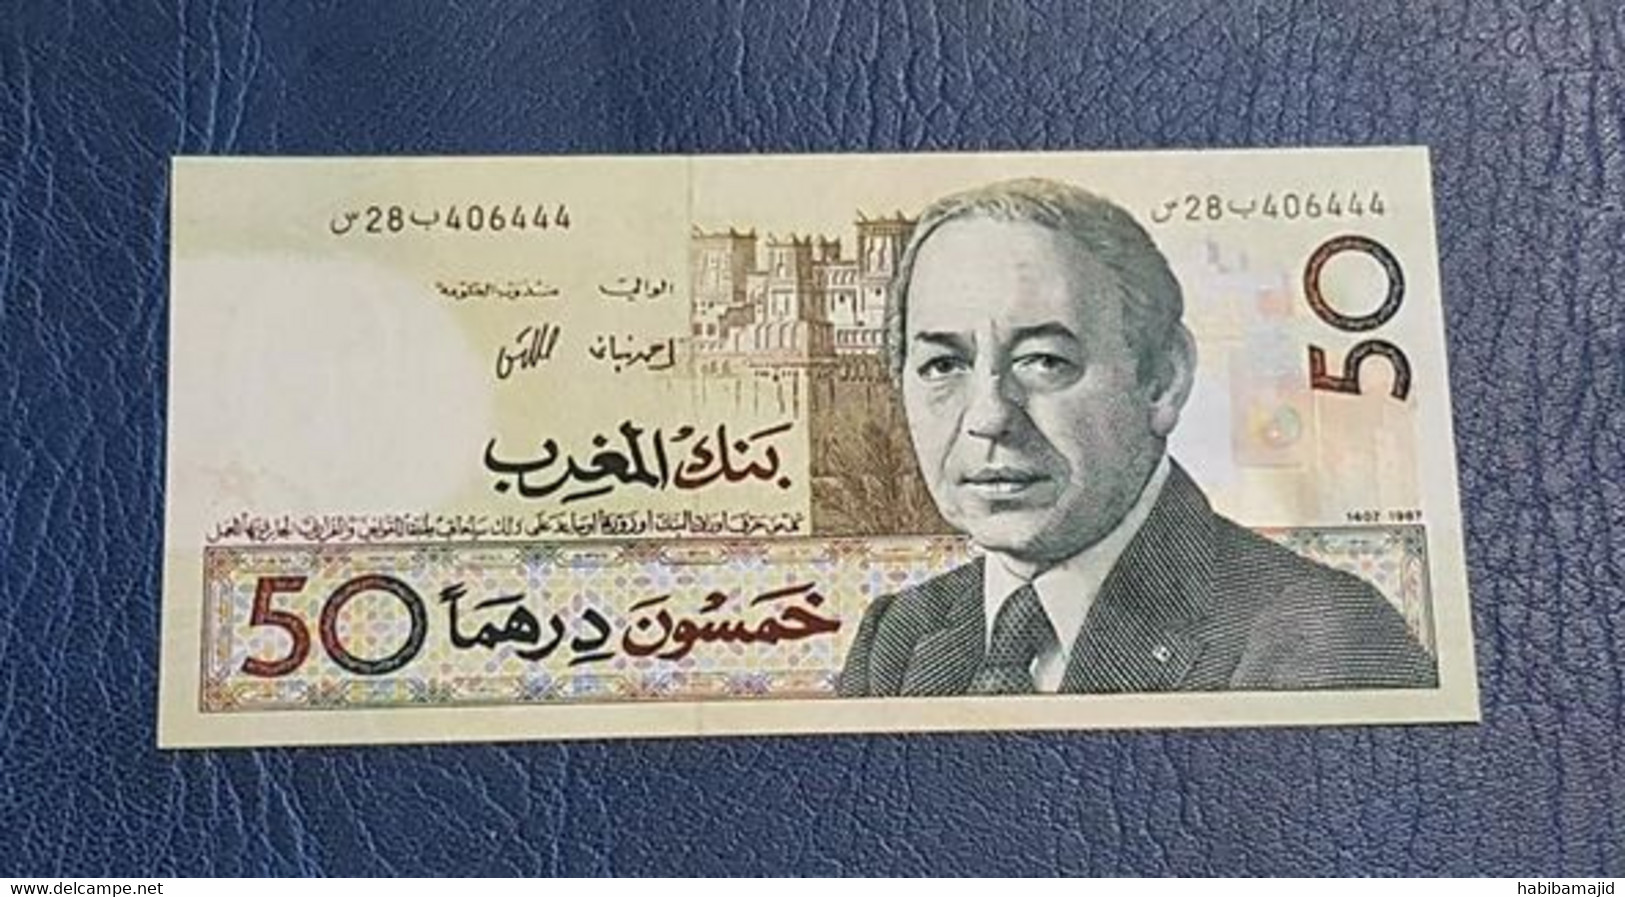 MAROC : "RARE" Billet De 50 Dirhams FACE (Hassan II) 1987 "UNC" - Marokko